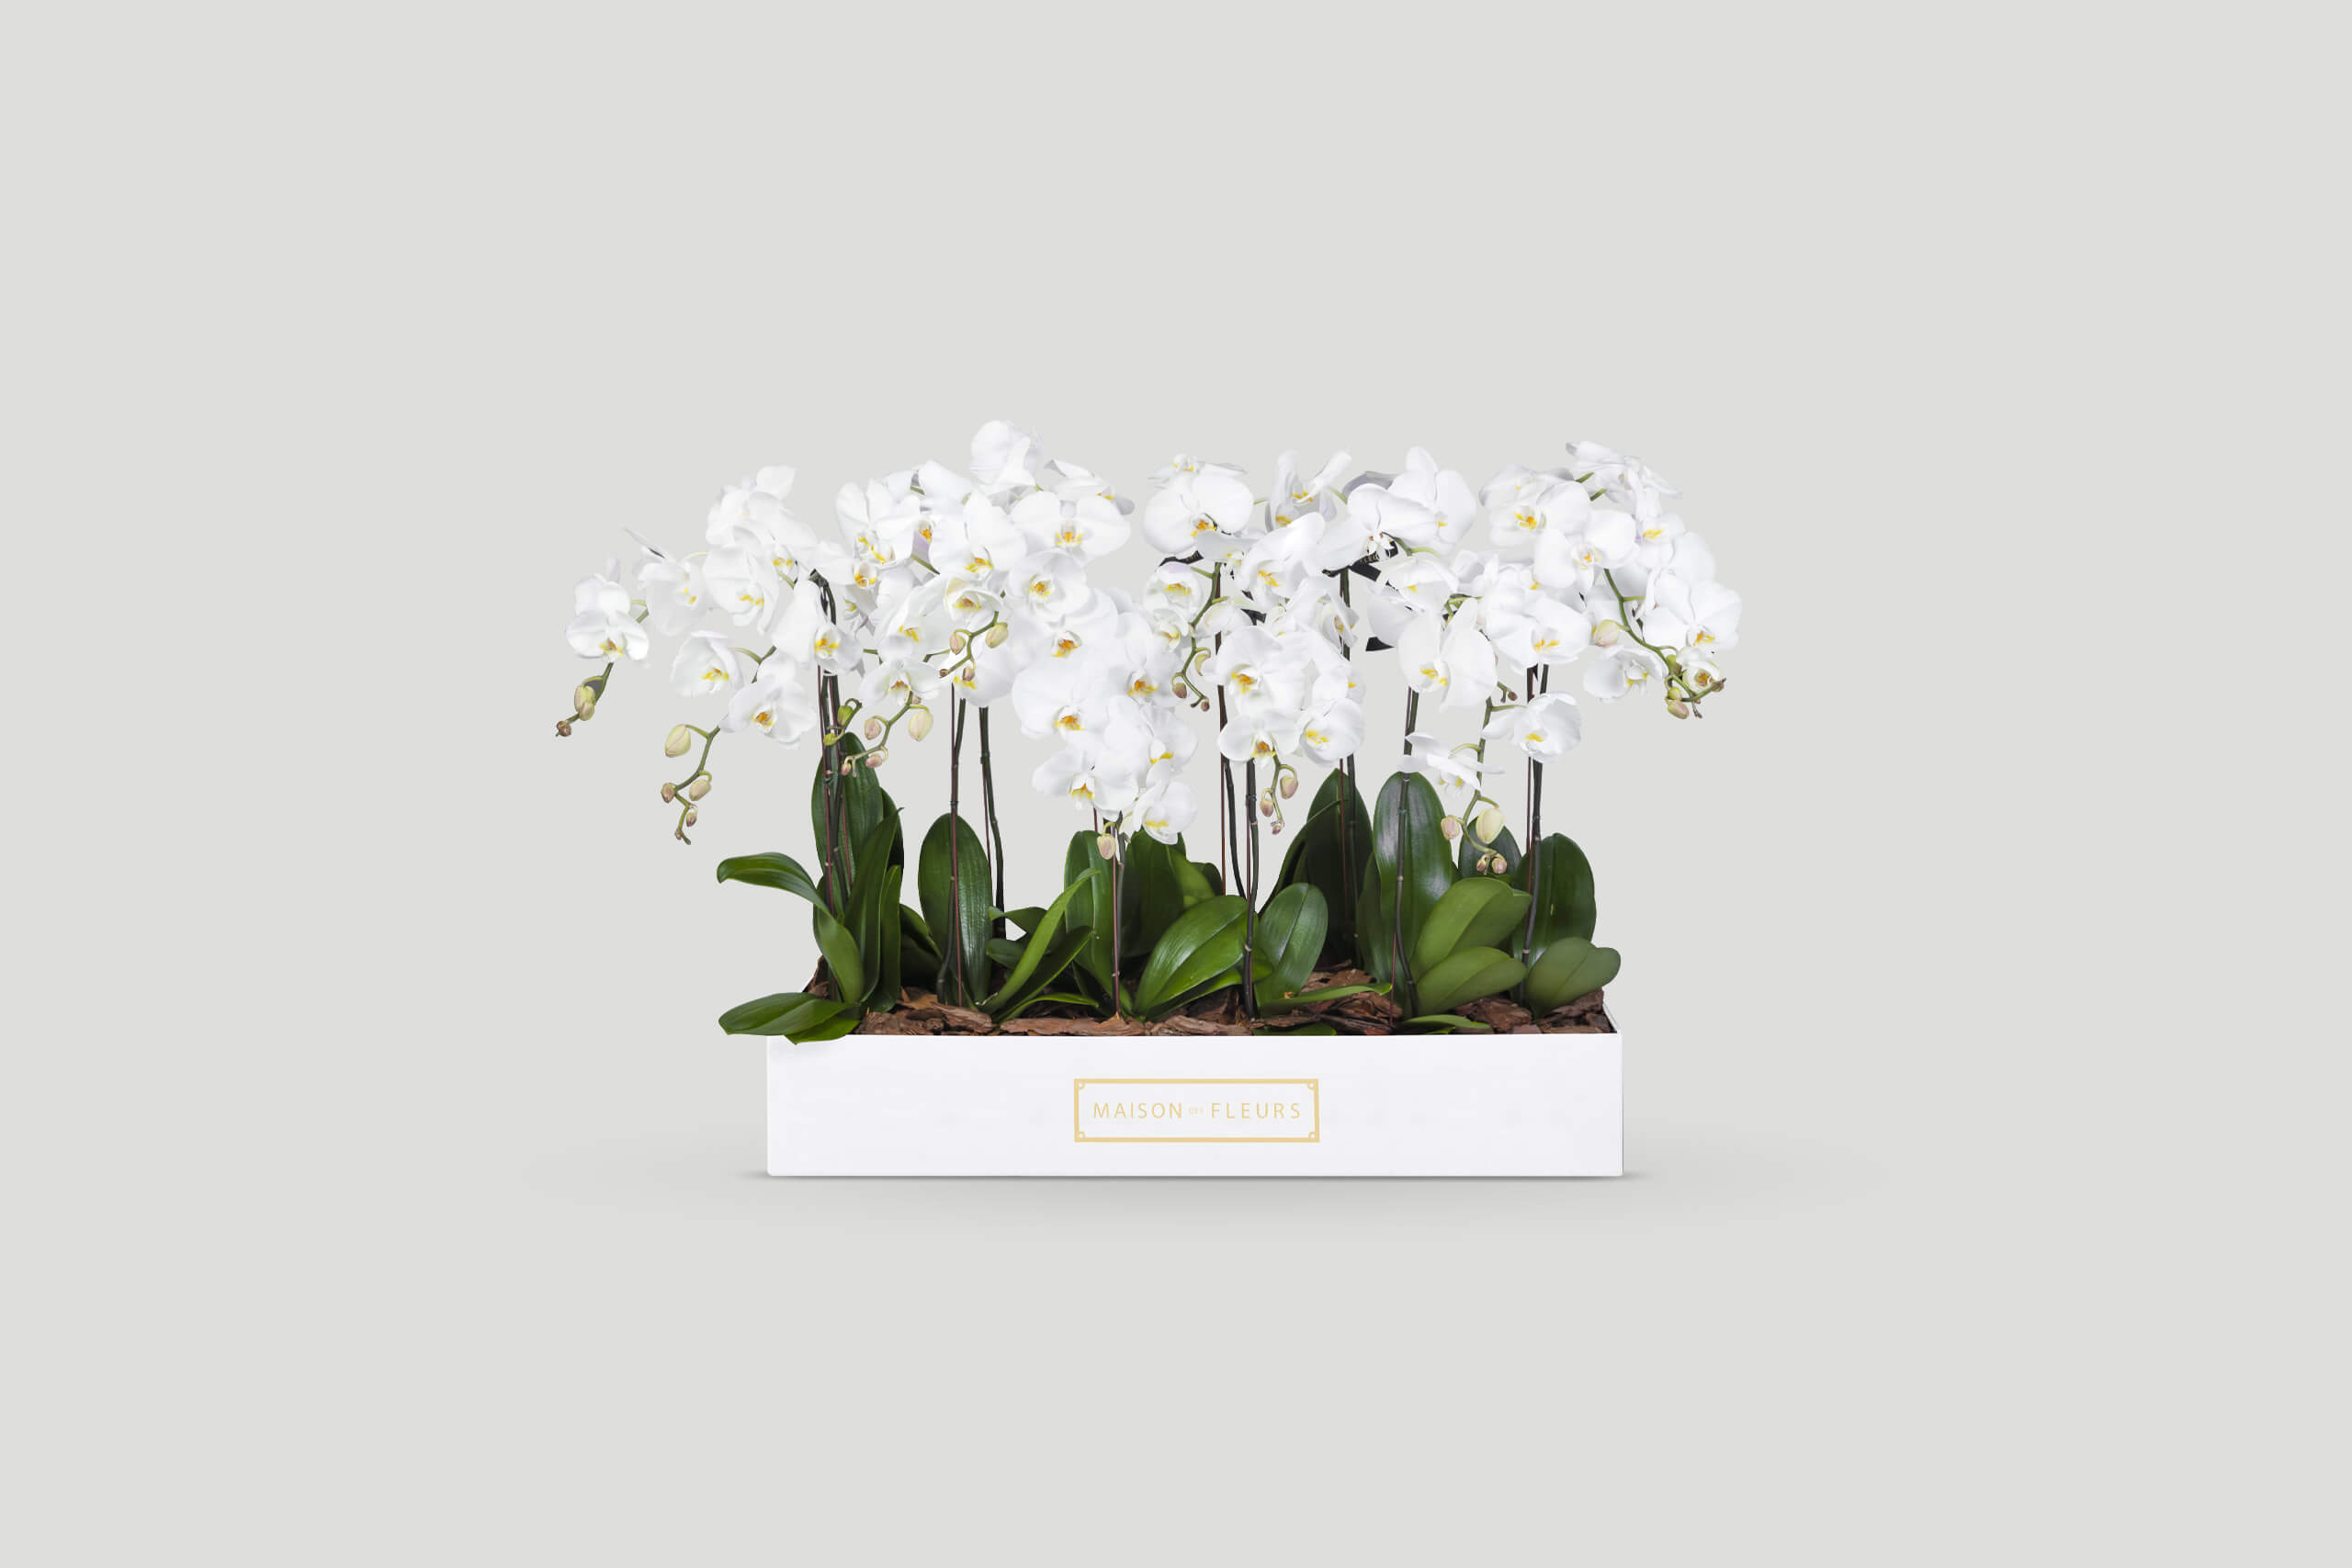 10 fresh white orchids in a 90 cm rectangular box